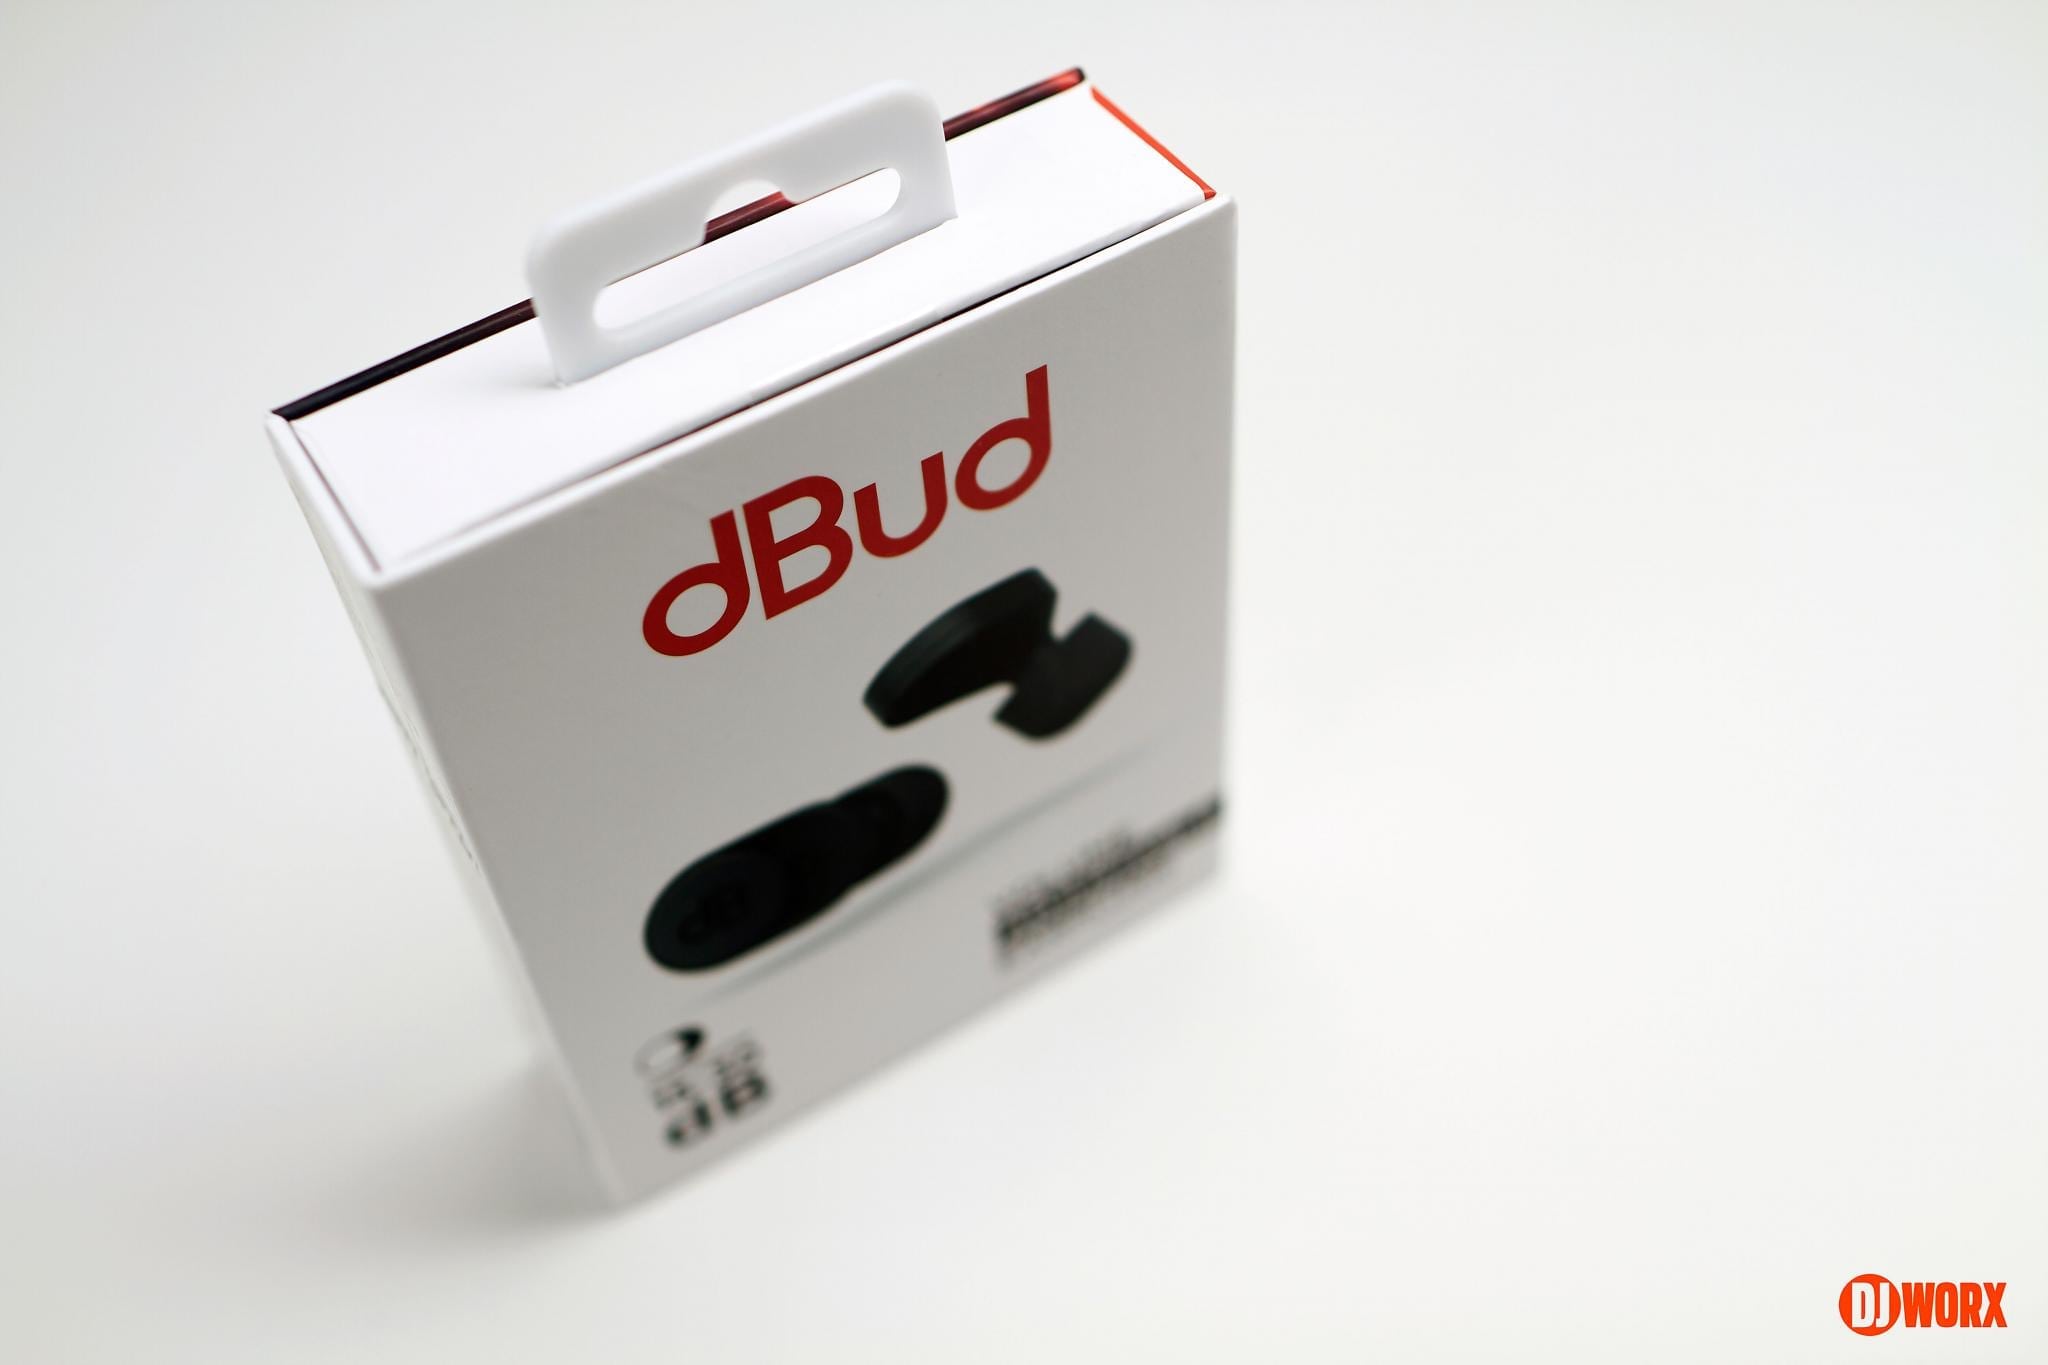 Dbud earplug review (1)